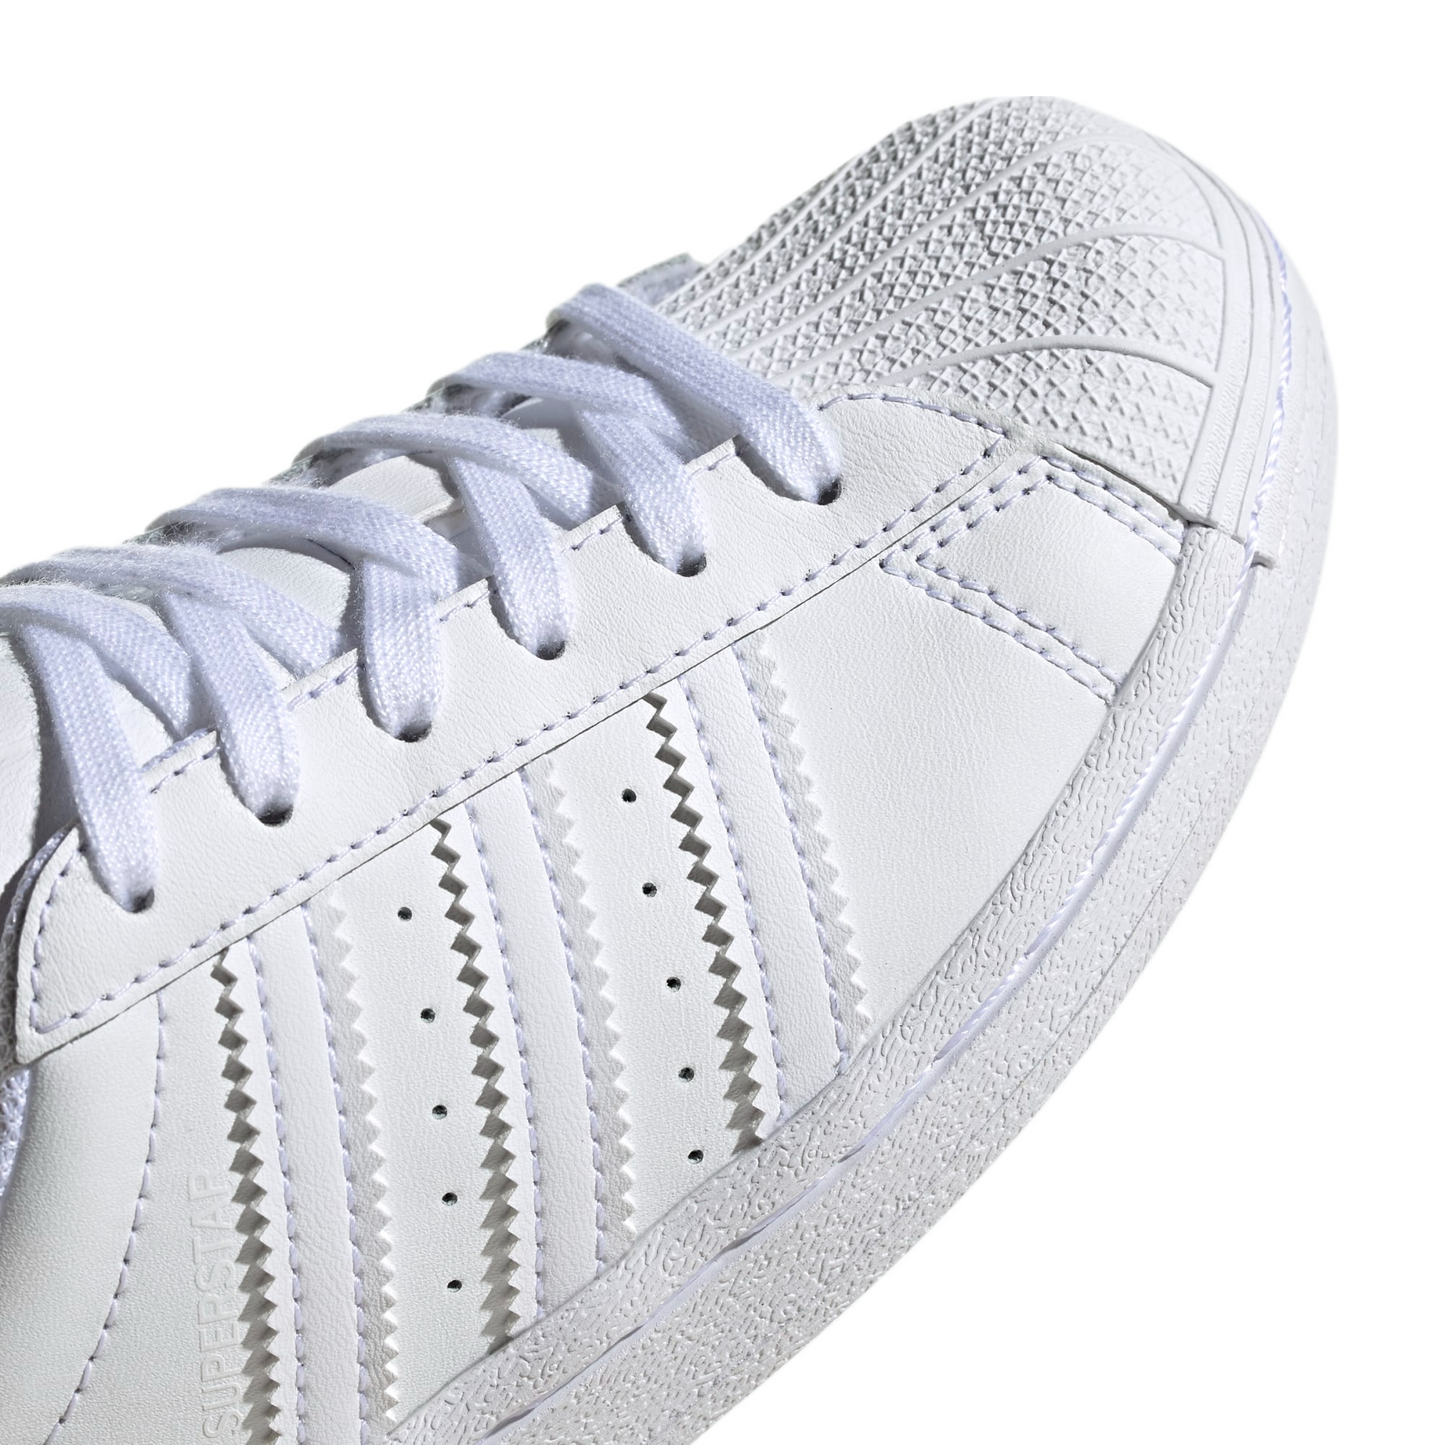 adidas Little Kids Superstar C Shoes White / White / White EF5395